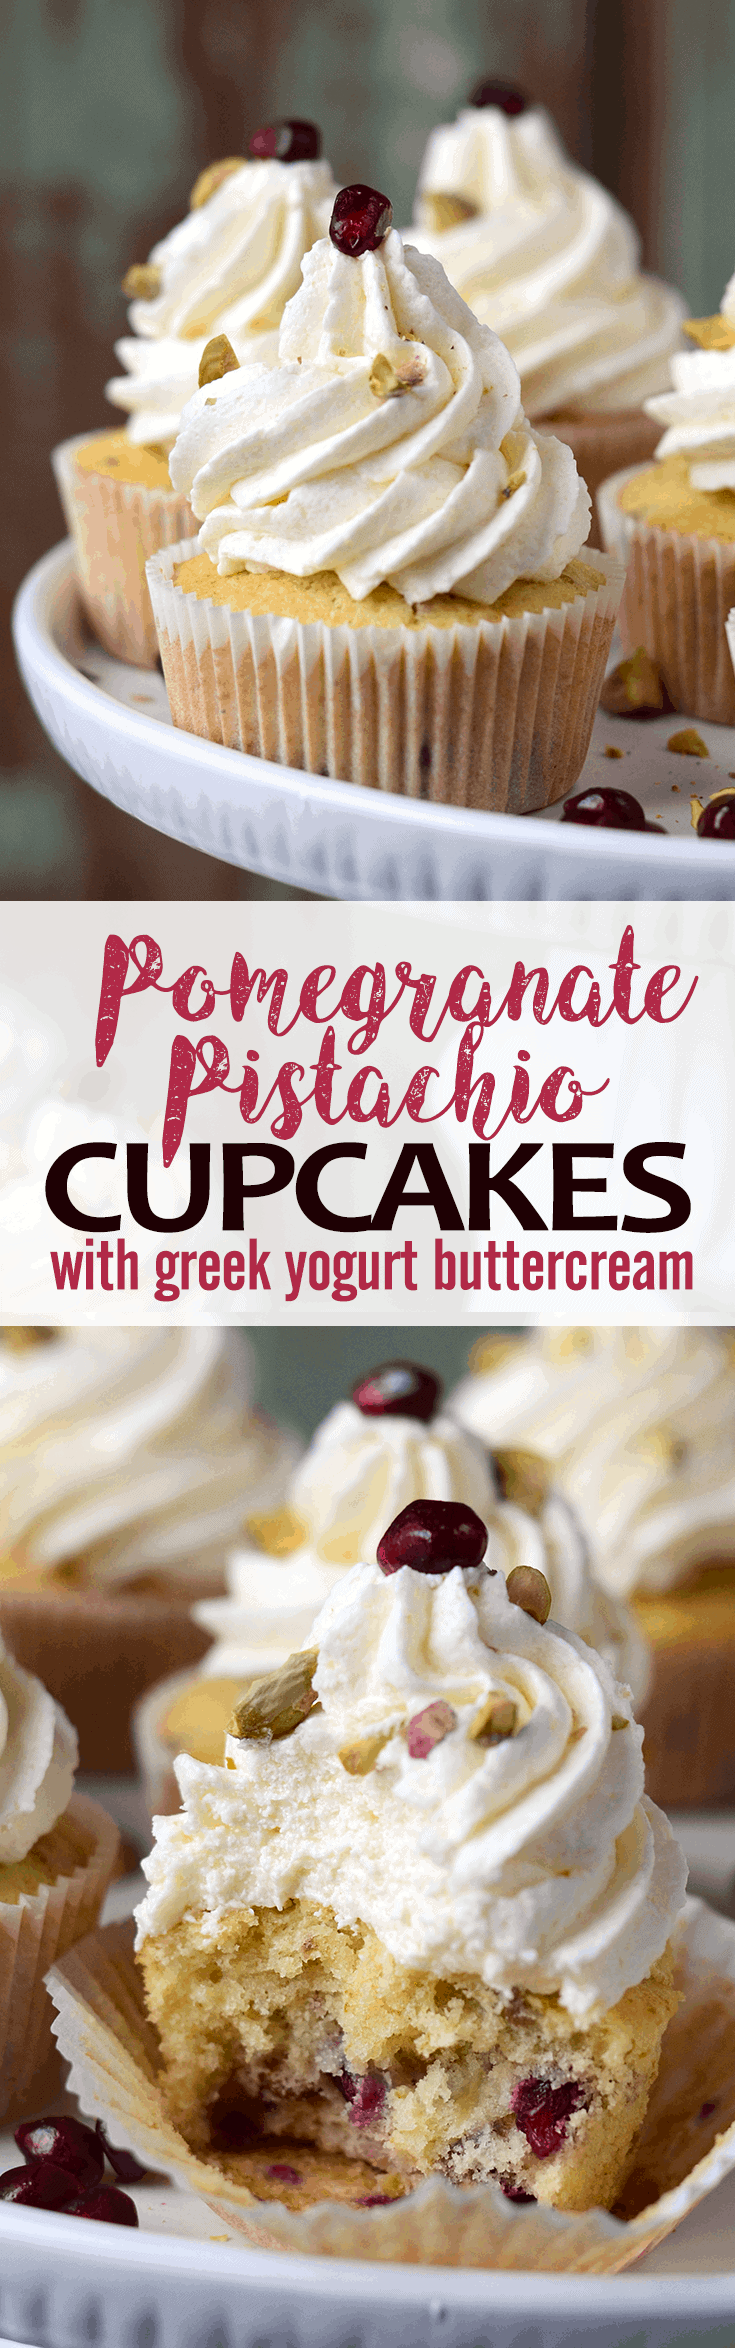 Pomegranate Pistachio Cupcakes - Pomegranate Pistachio Cupcakes </br>with Greek Yogurt Buttercream